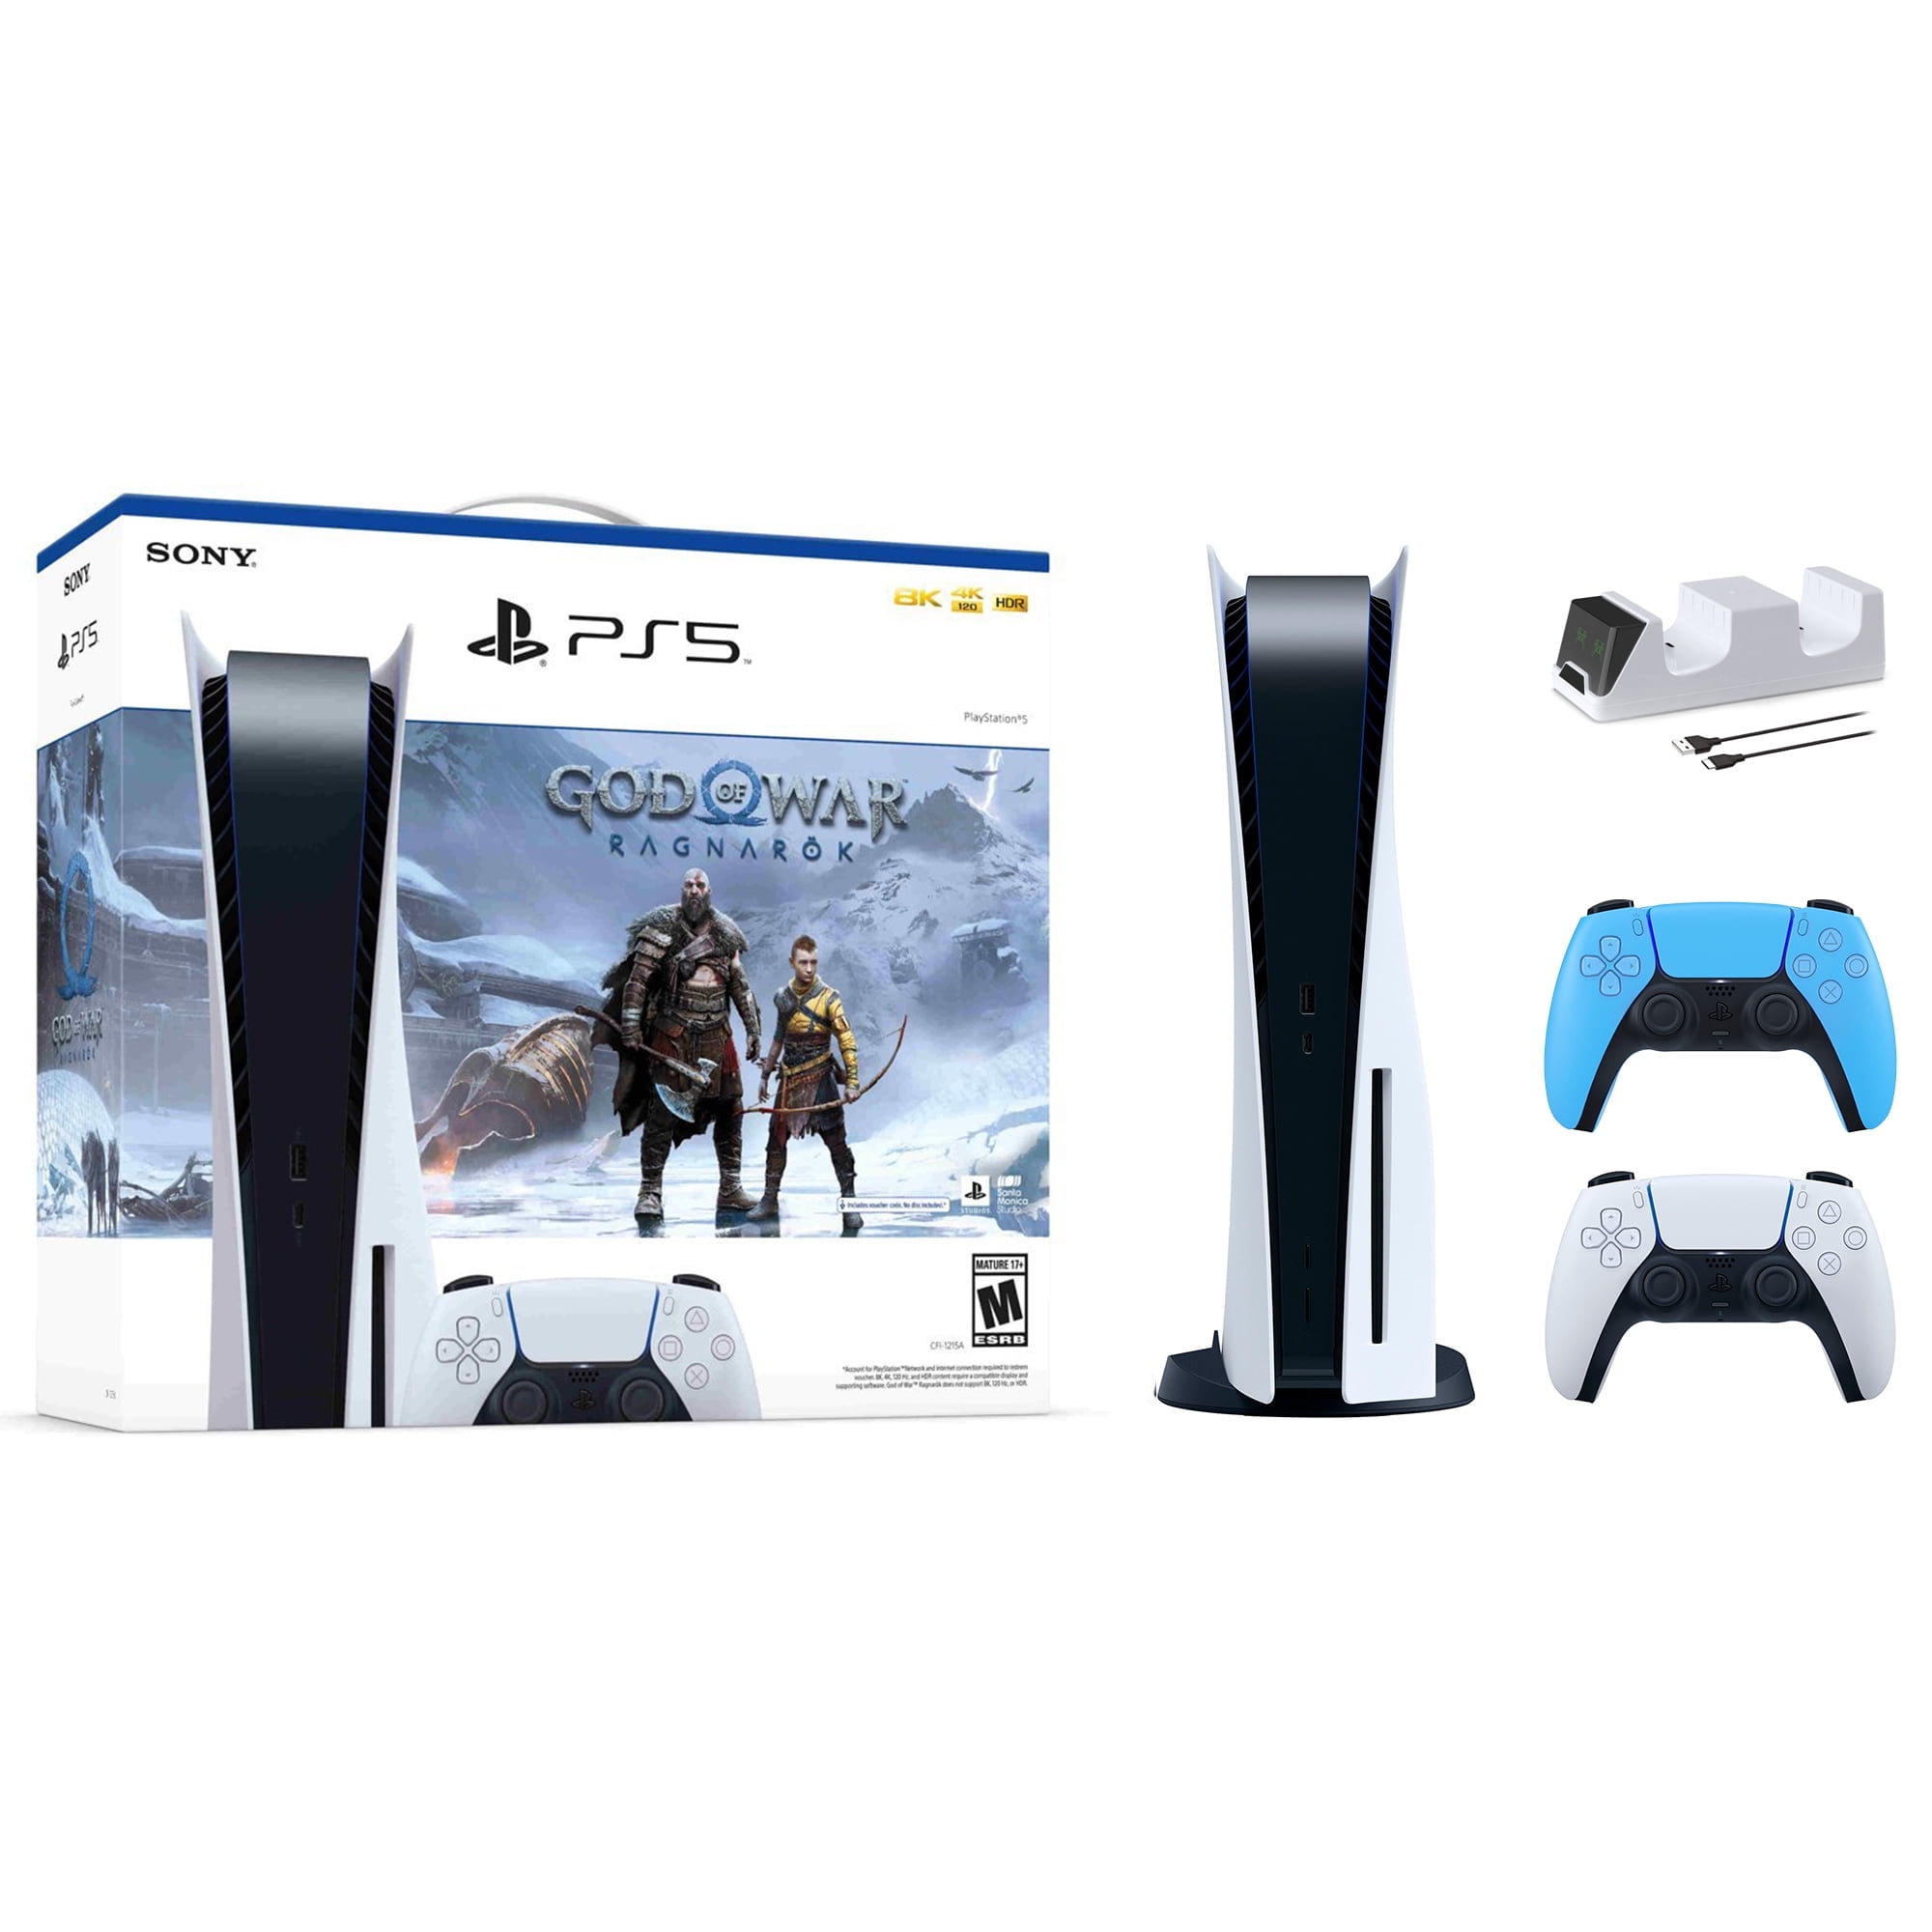 God of War Ragnarök PS5 dualsense controller: Price, pre-order and release  date